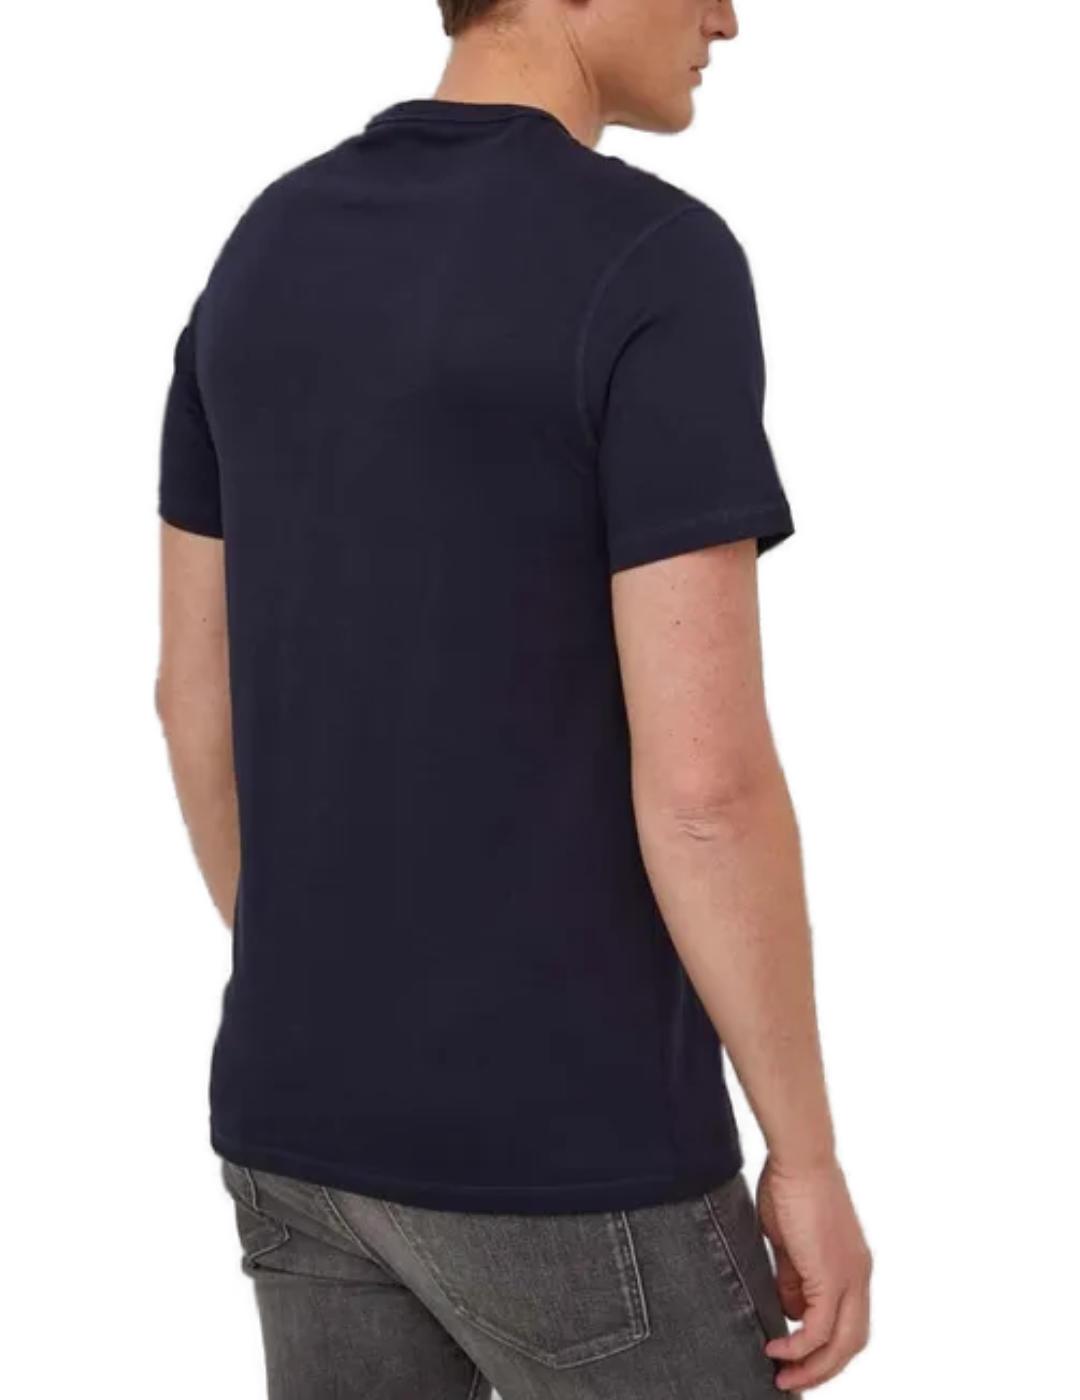 Camiseta Guess Patch azul marino manga corta para hombre